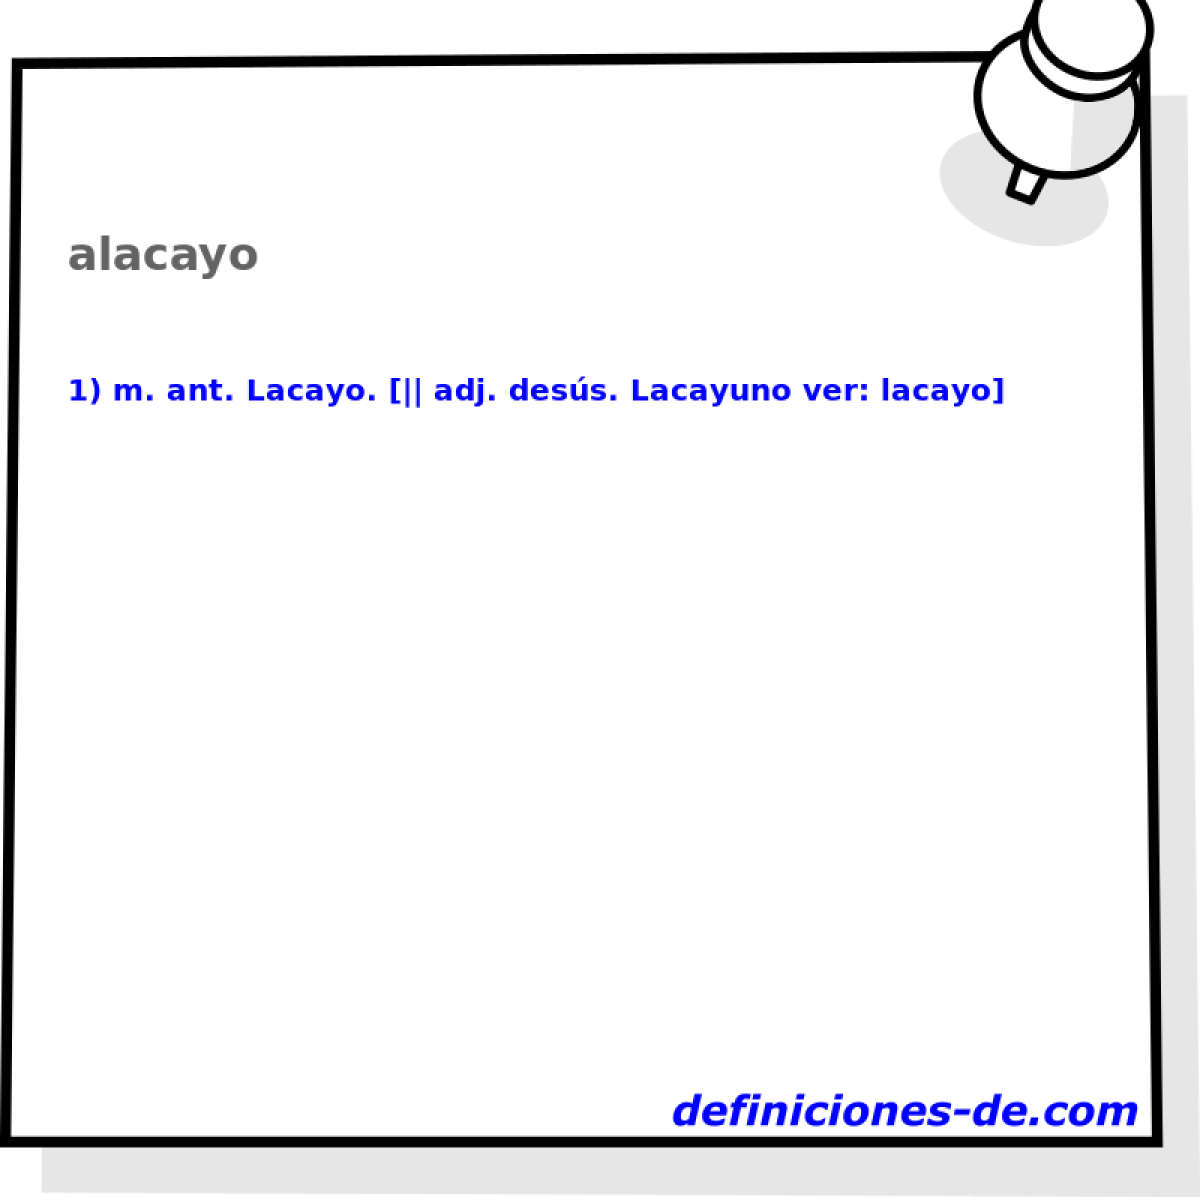 alacayo 